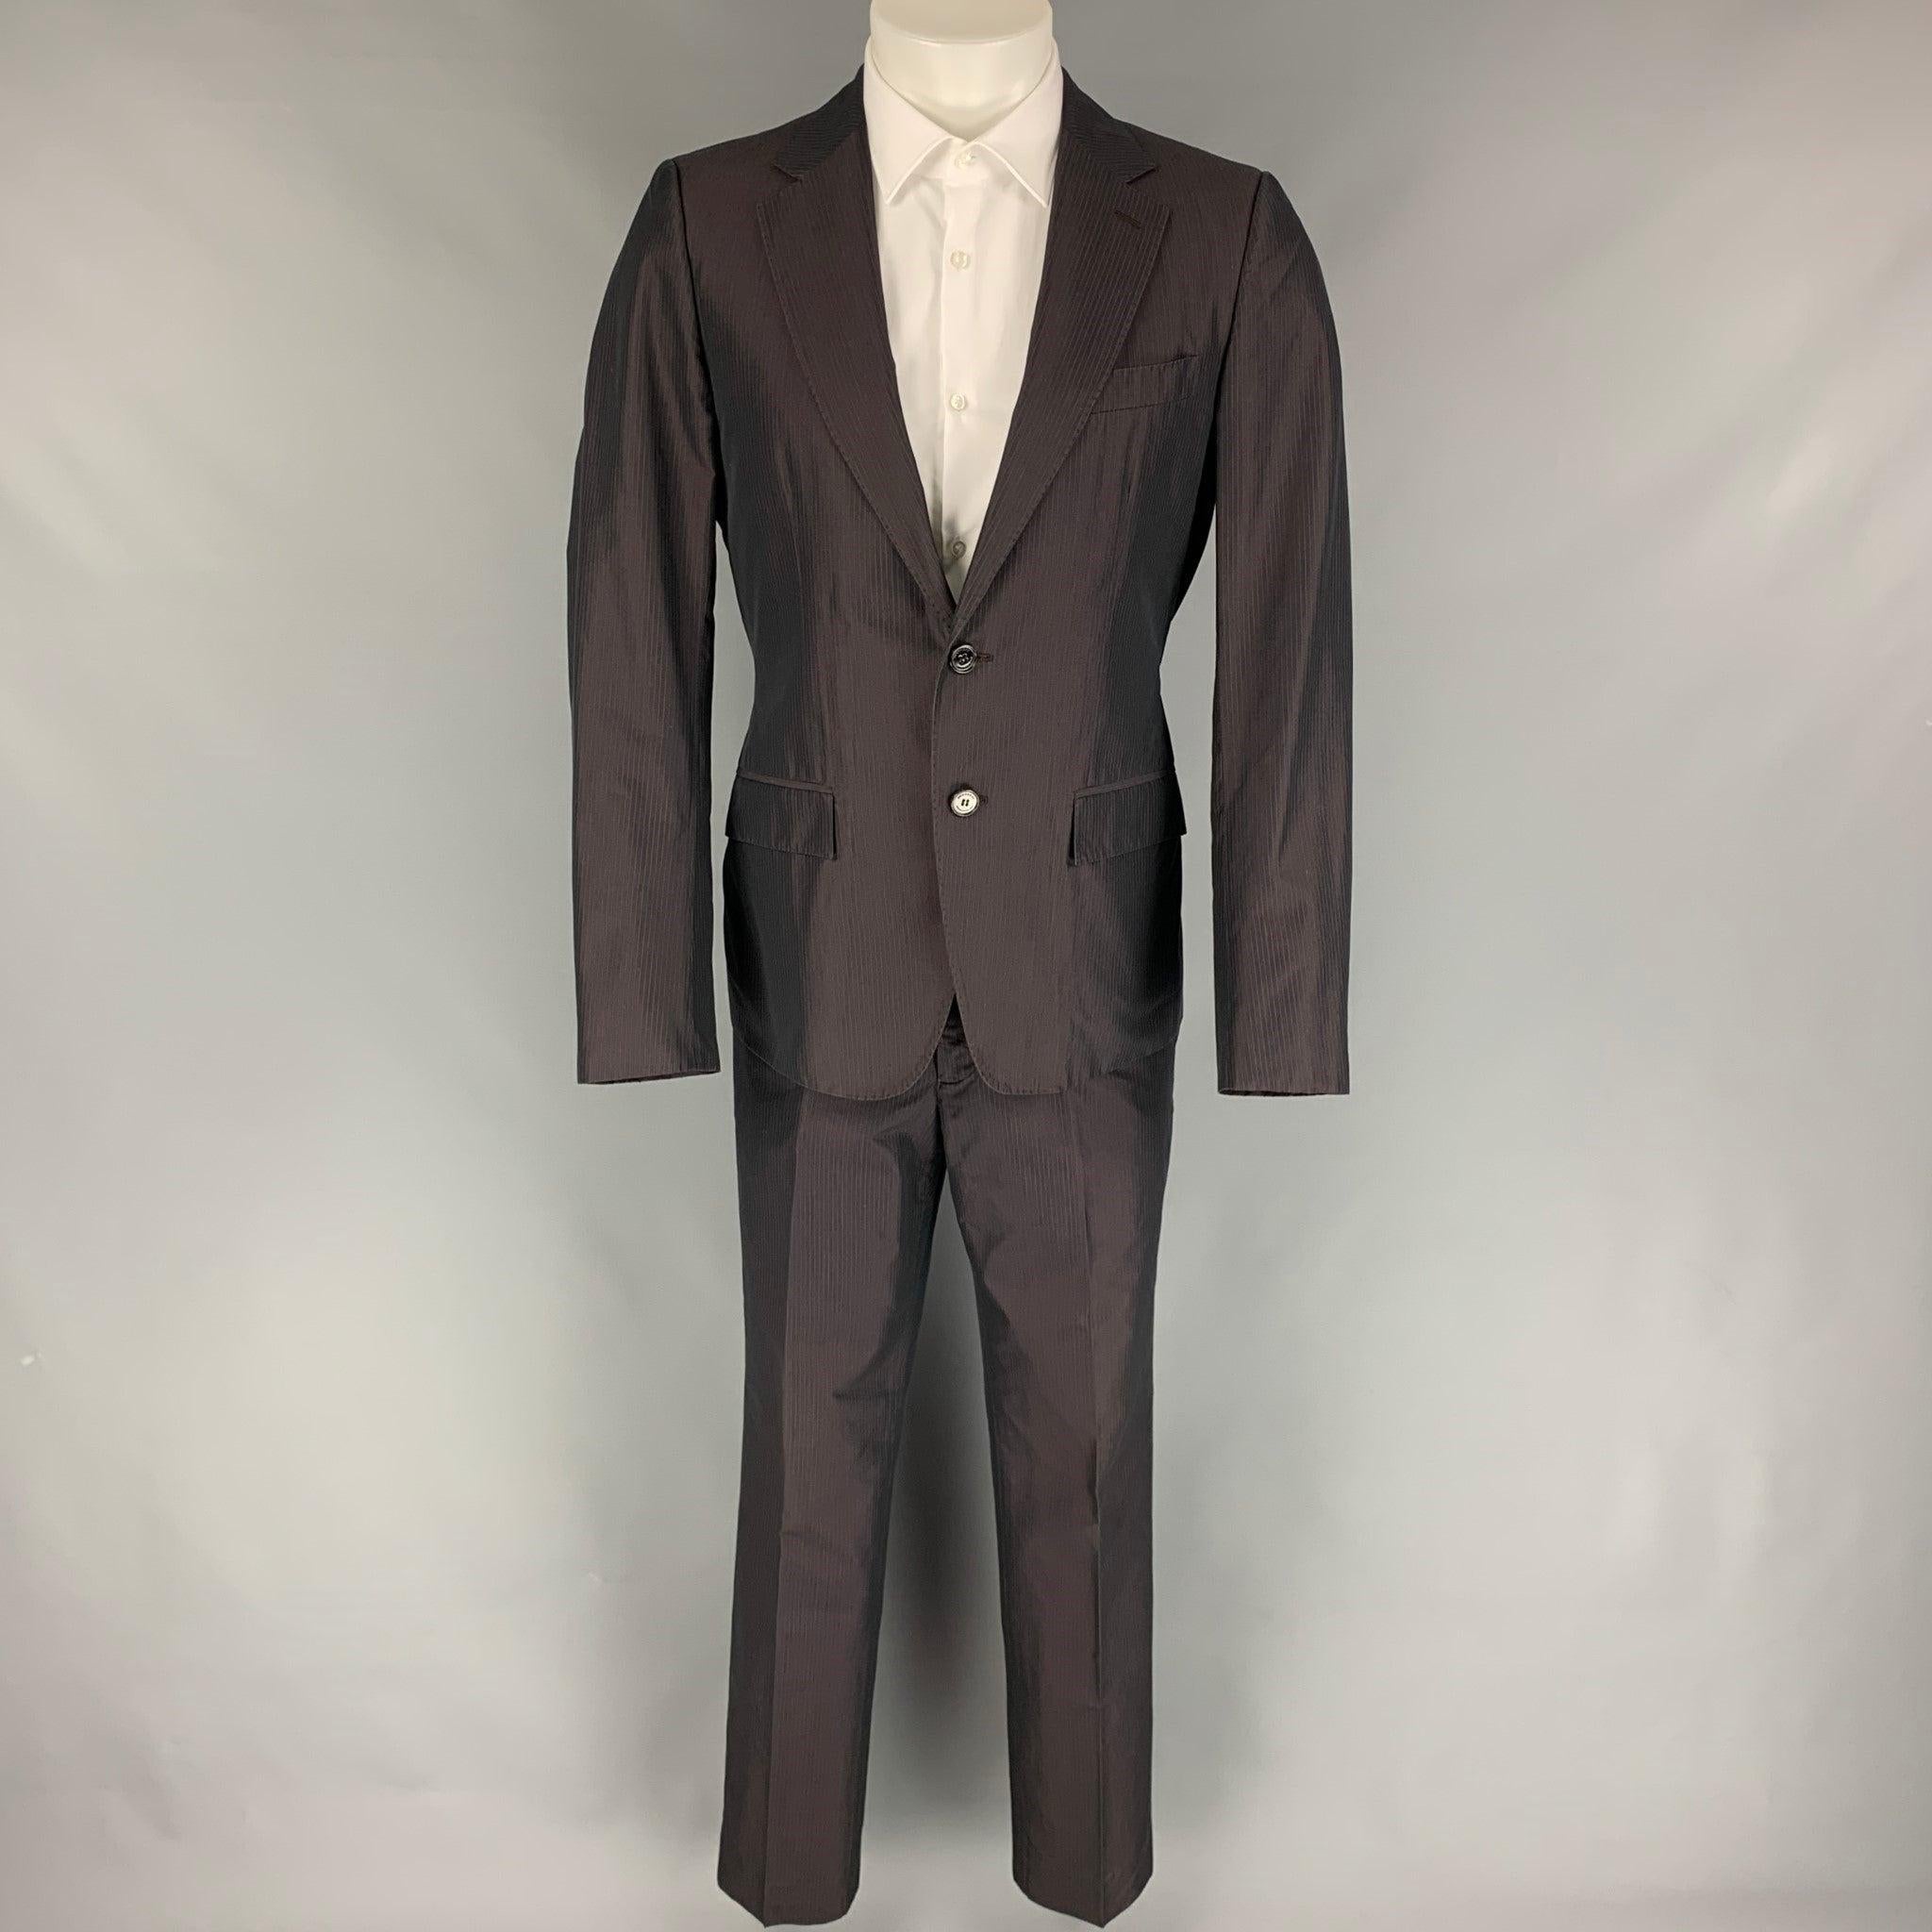 BURBERRY PRORSUM Spring 2008 Size 38 Regular Plum Stripe Cotton / Silk Suit In Good Condition For Sale In San Francisco, CA